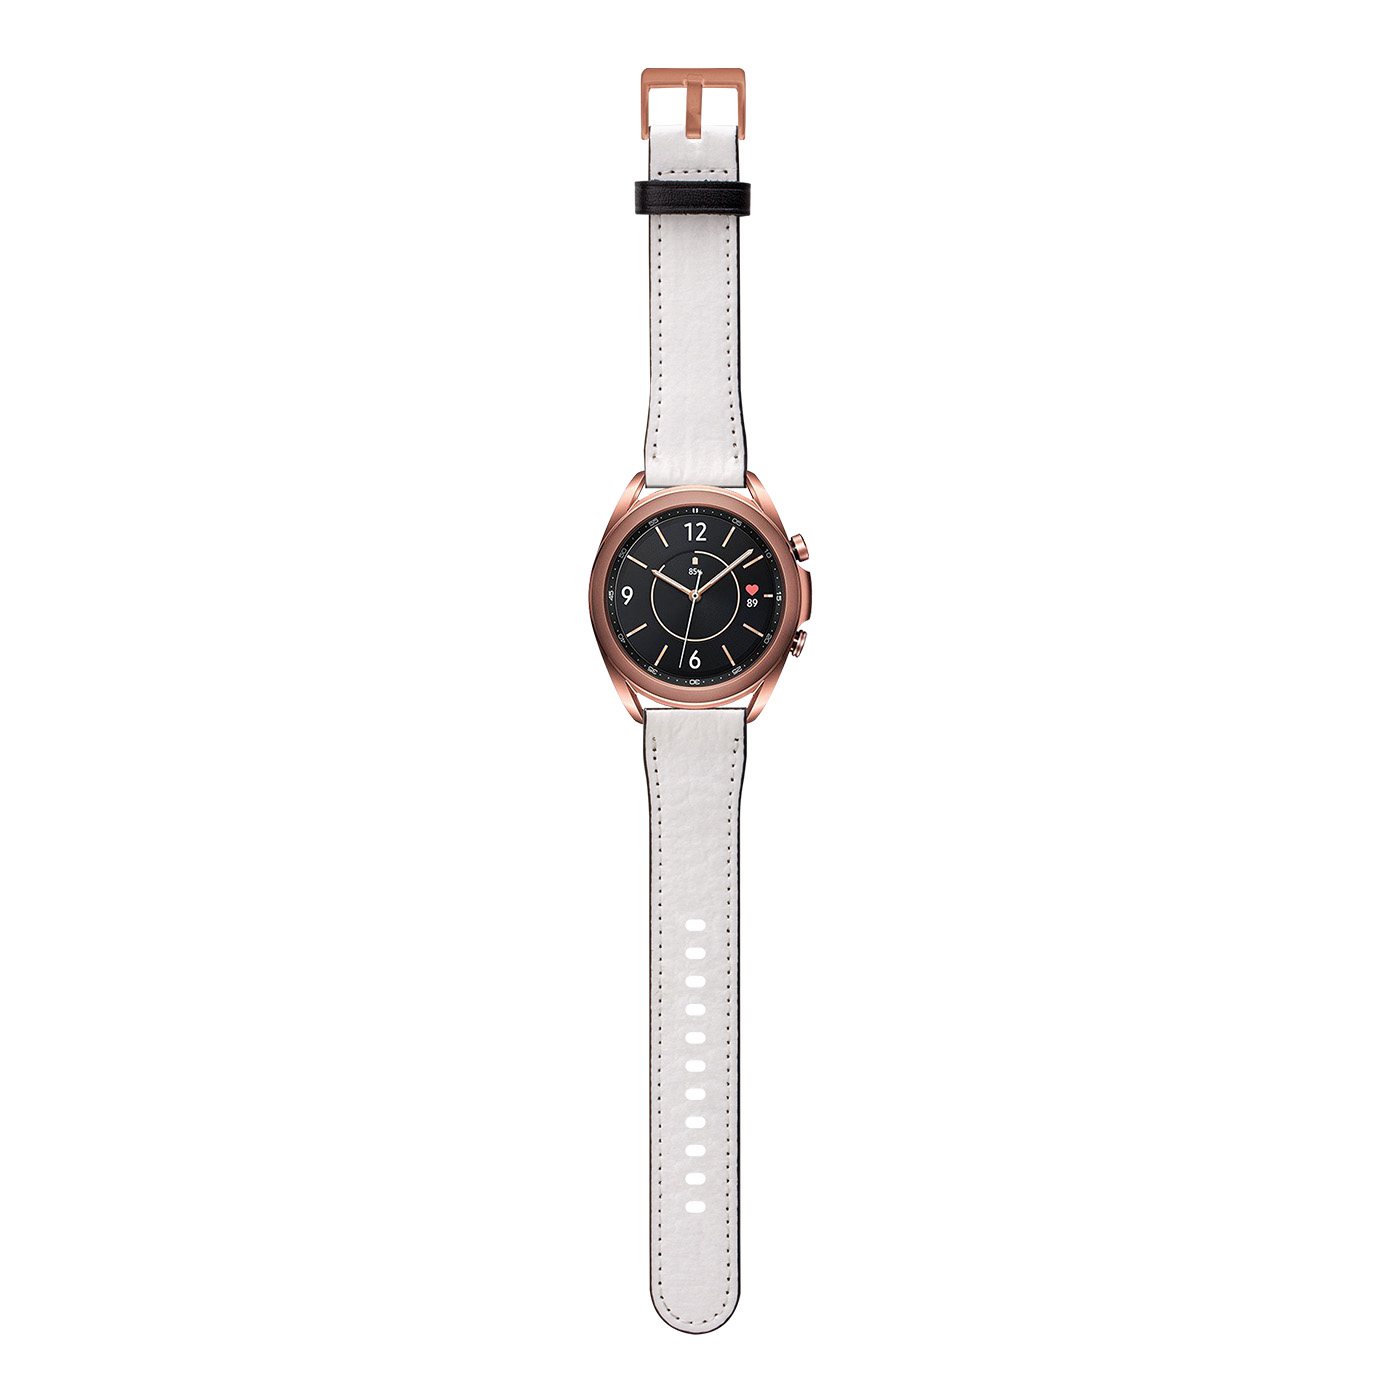 Celini Design Samsung Galaxy Watch Band | Louis Vuitton Watch Band